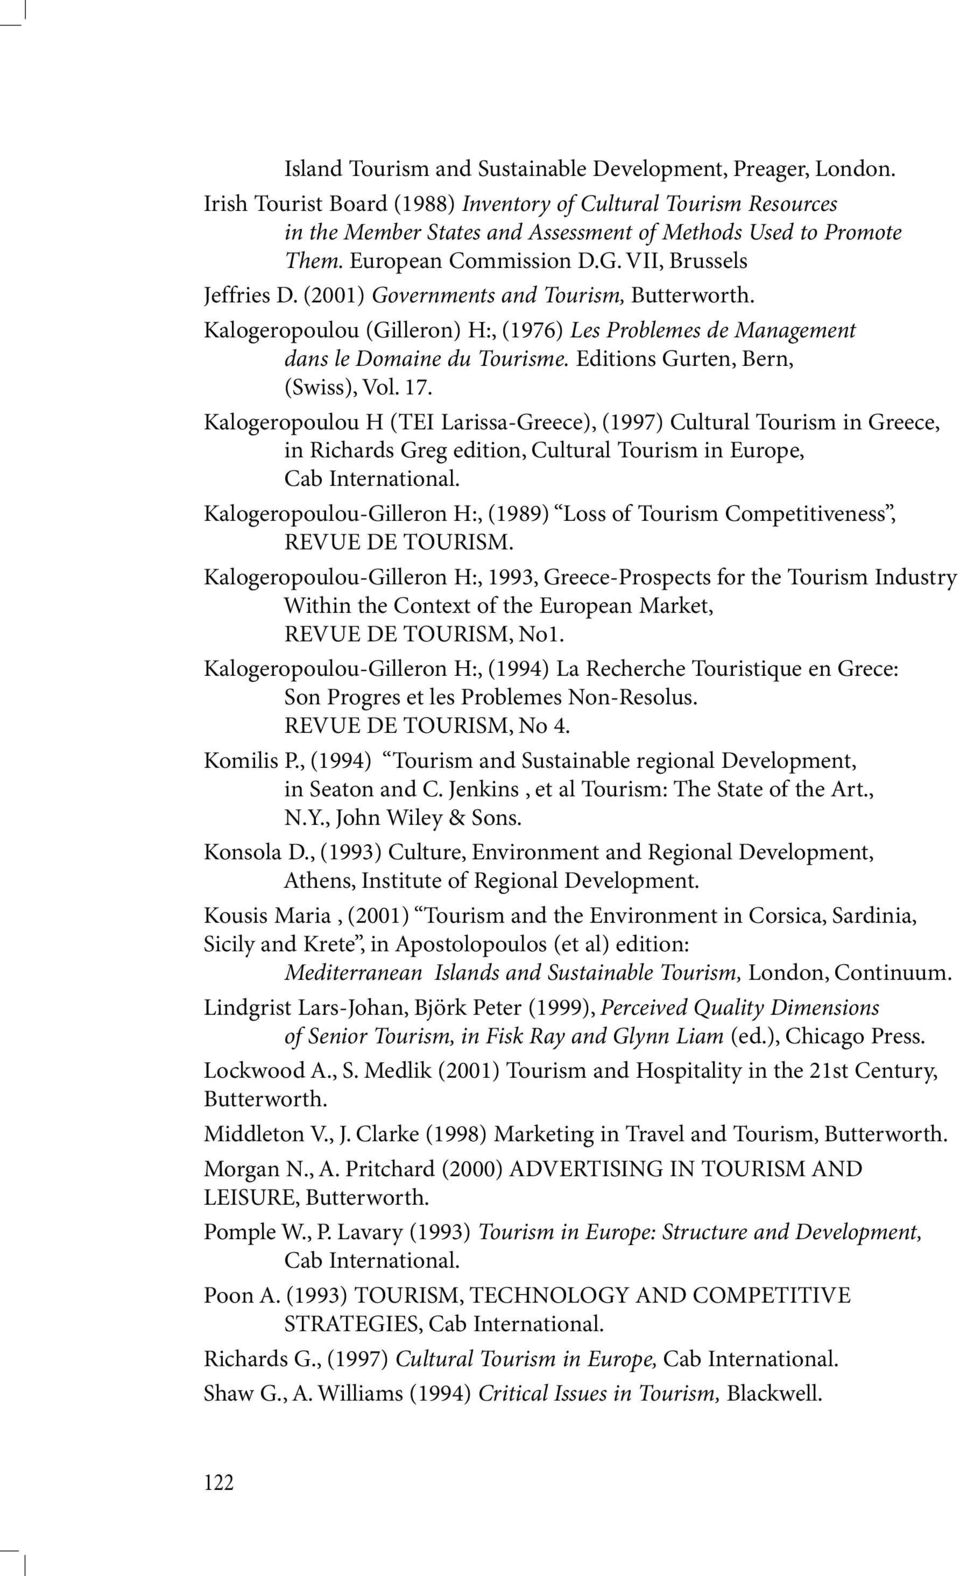 Editions Gurten, Bern, (Swiss), Vol. 17. Kalogeropoulou H (TEI Larissa-Greece), (1997) Cultural Tourism in Greece, in Richards Greg edition, Cultural Tourism in Europe, Cab International.